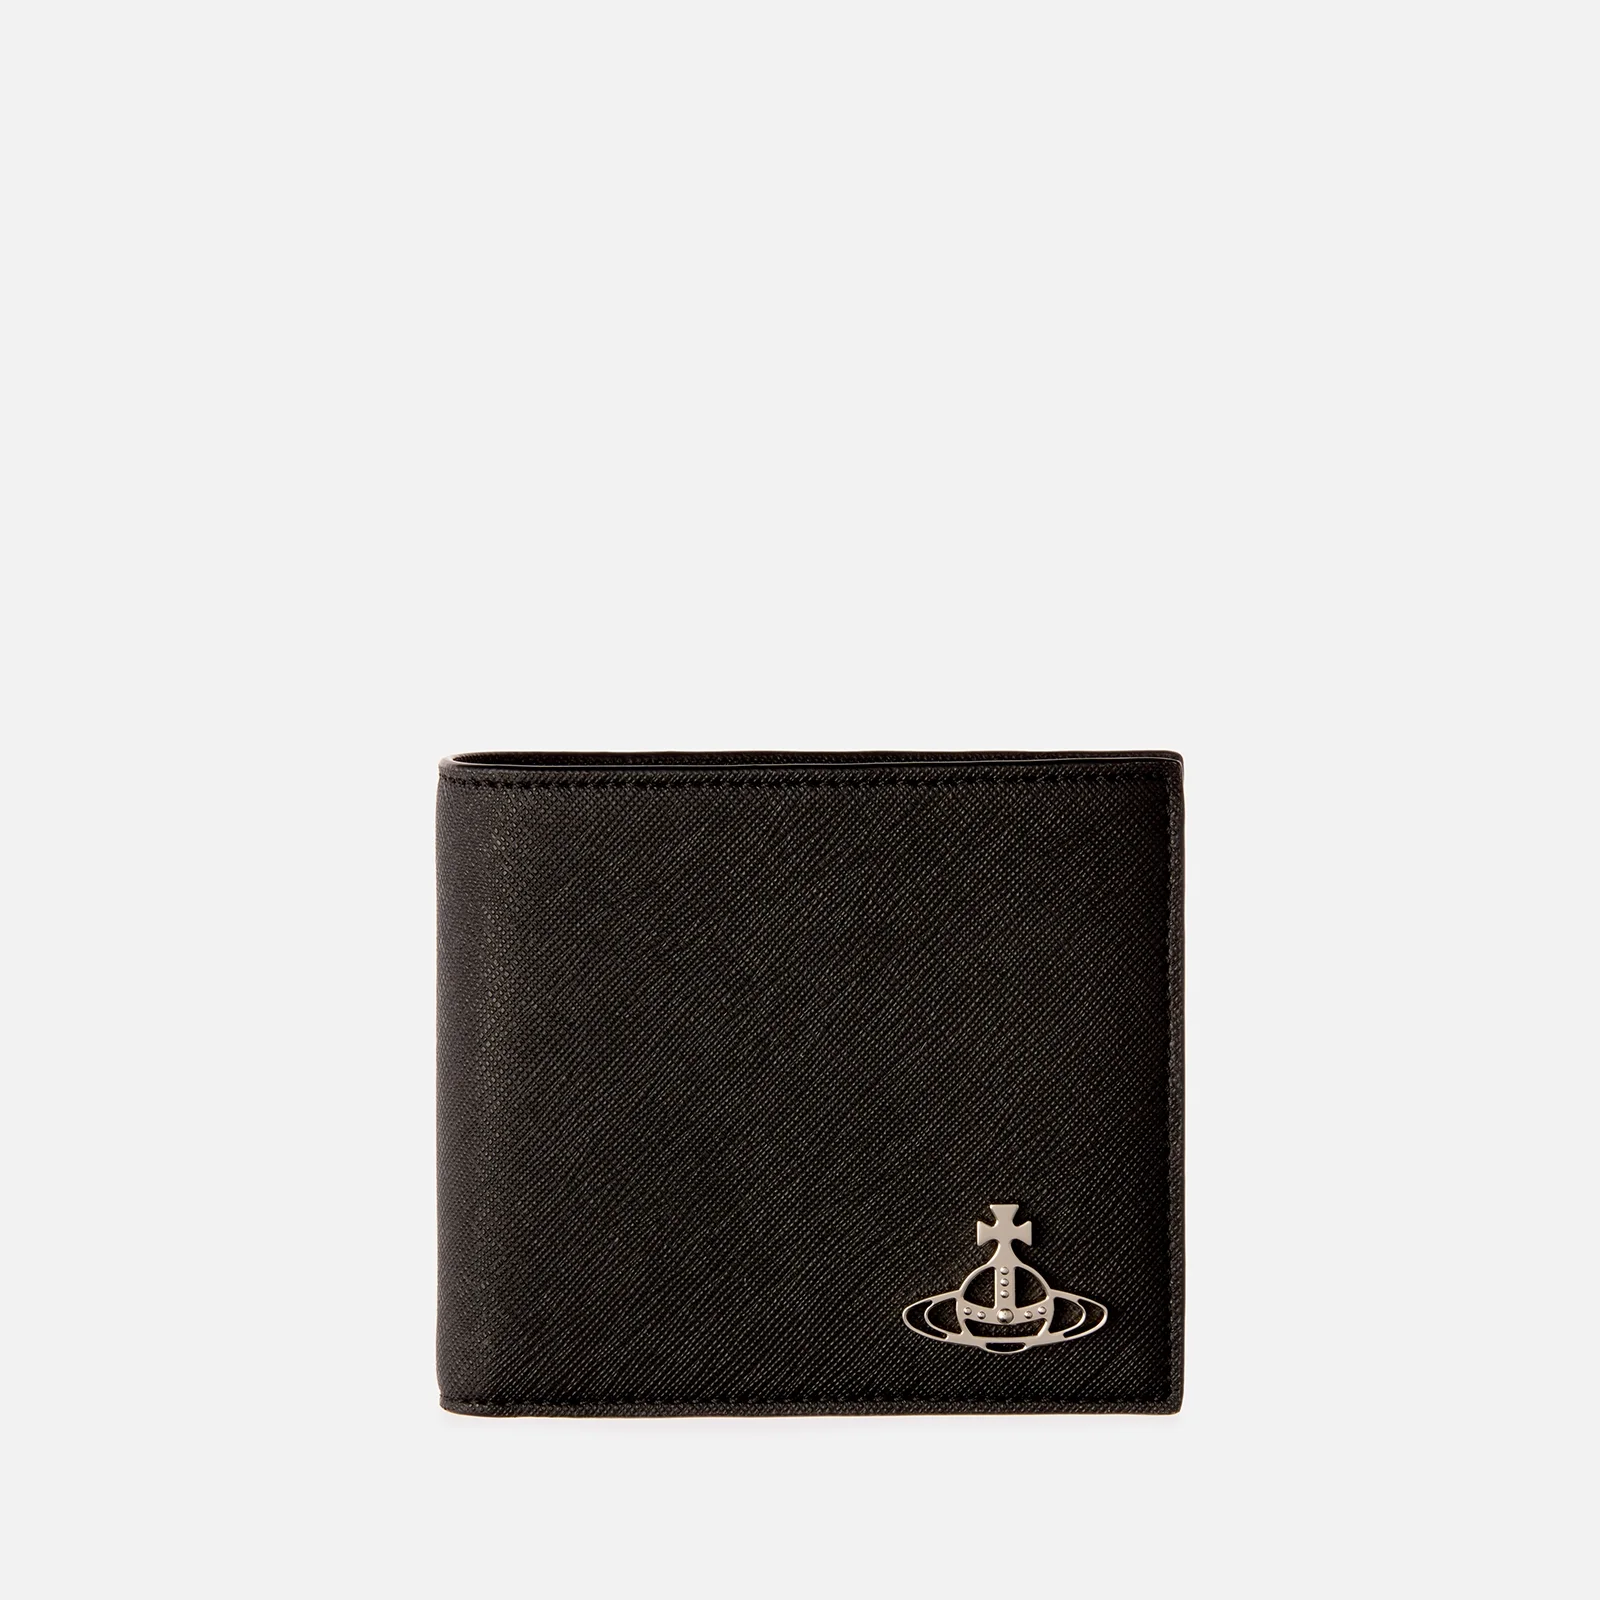 Vivienne Westwood Saffiano Leather Wallet Image 1